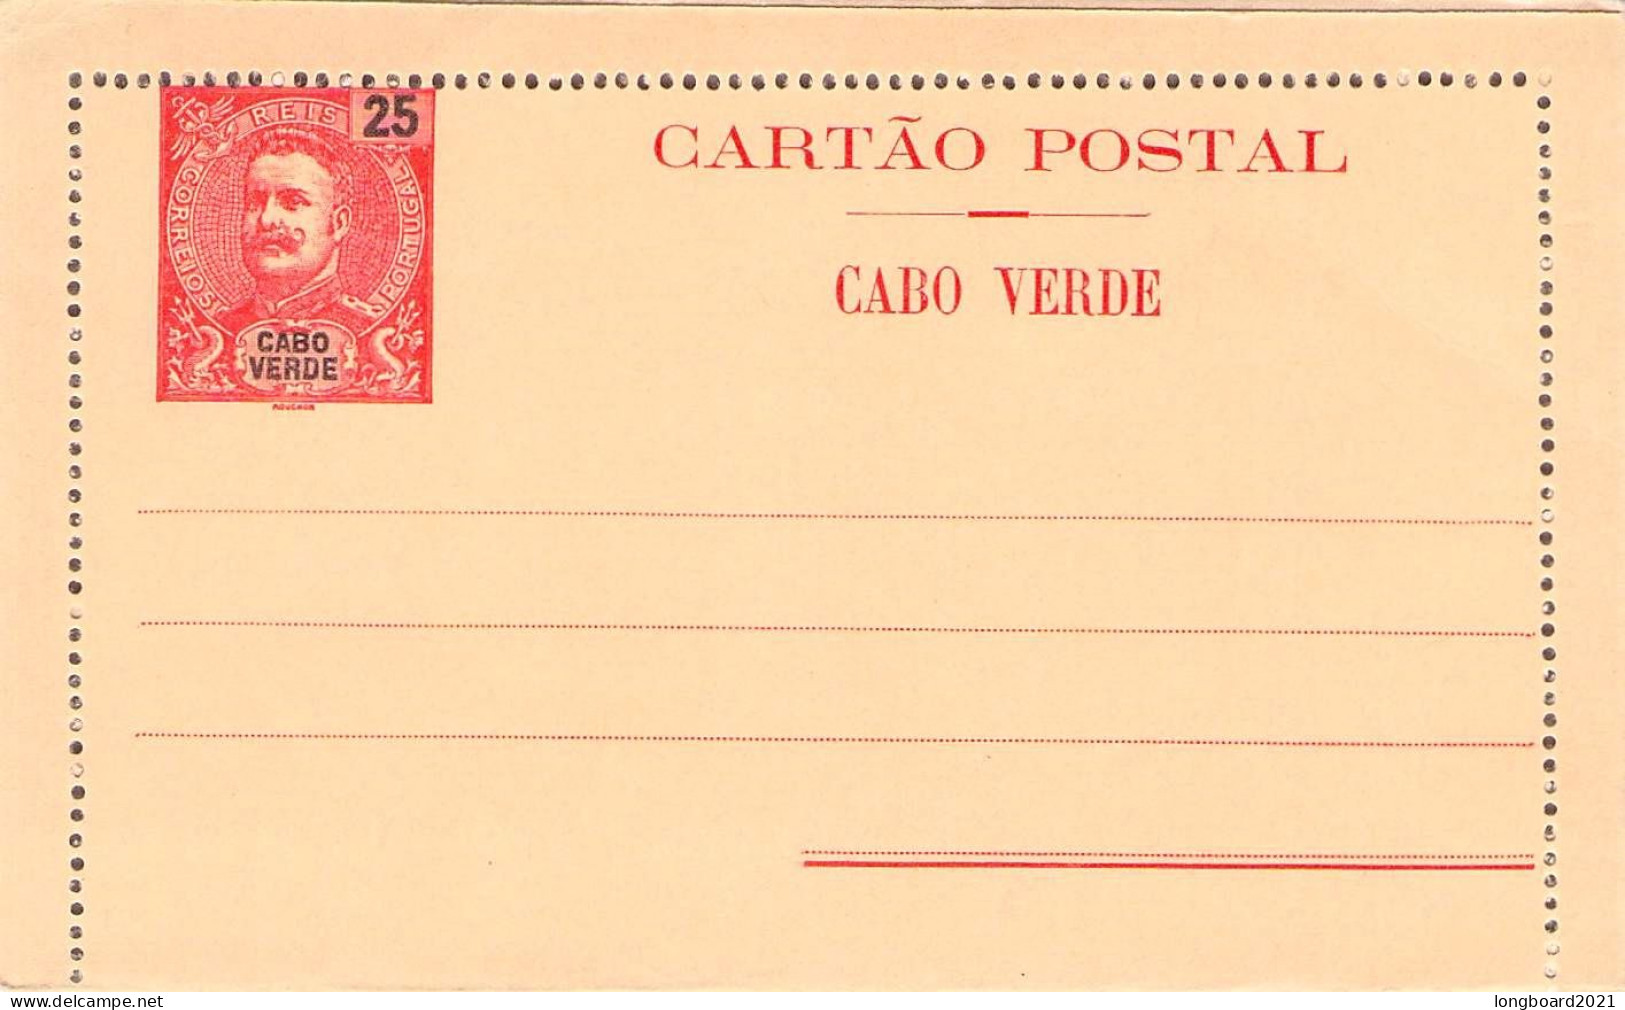 CABO VERDE - CARTAO POSTAL 25 REIS Unc / *2064 - Cape Verde